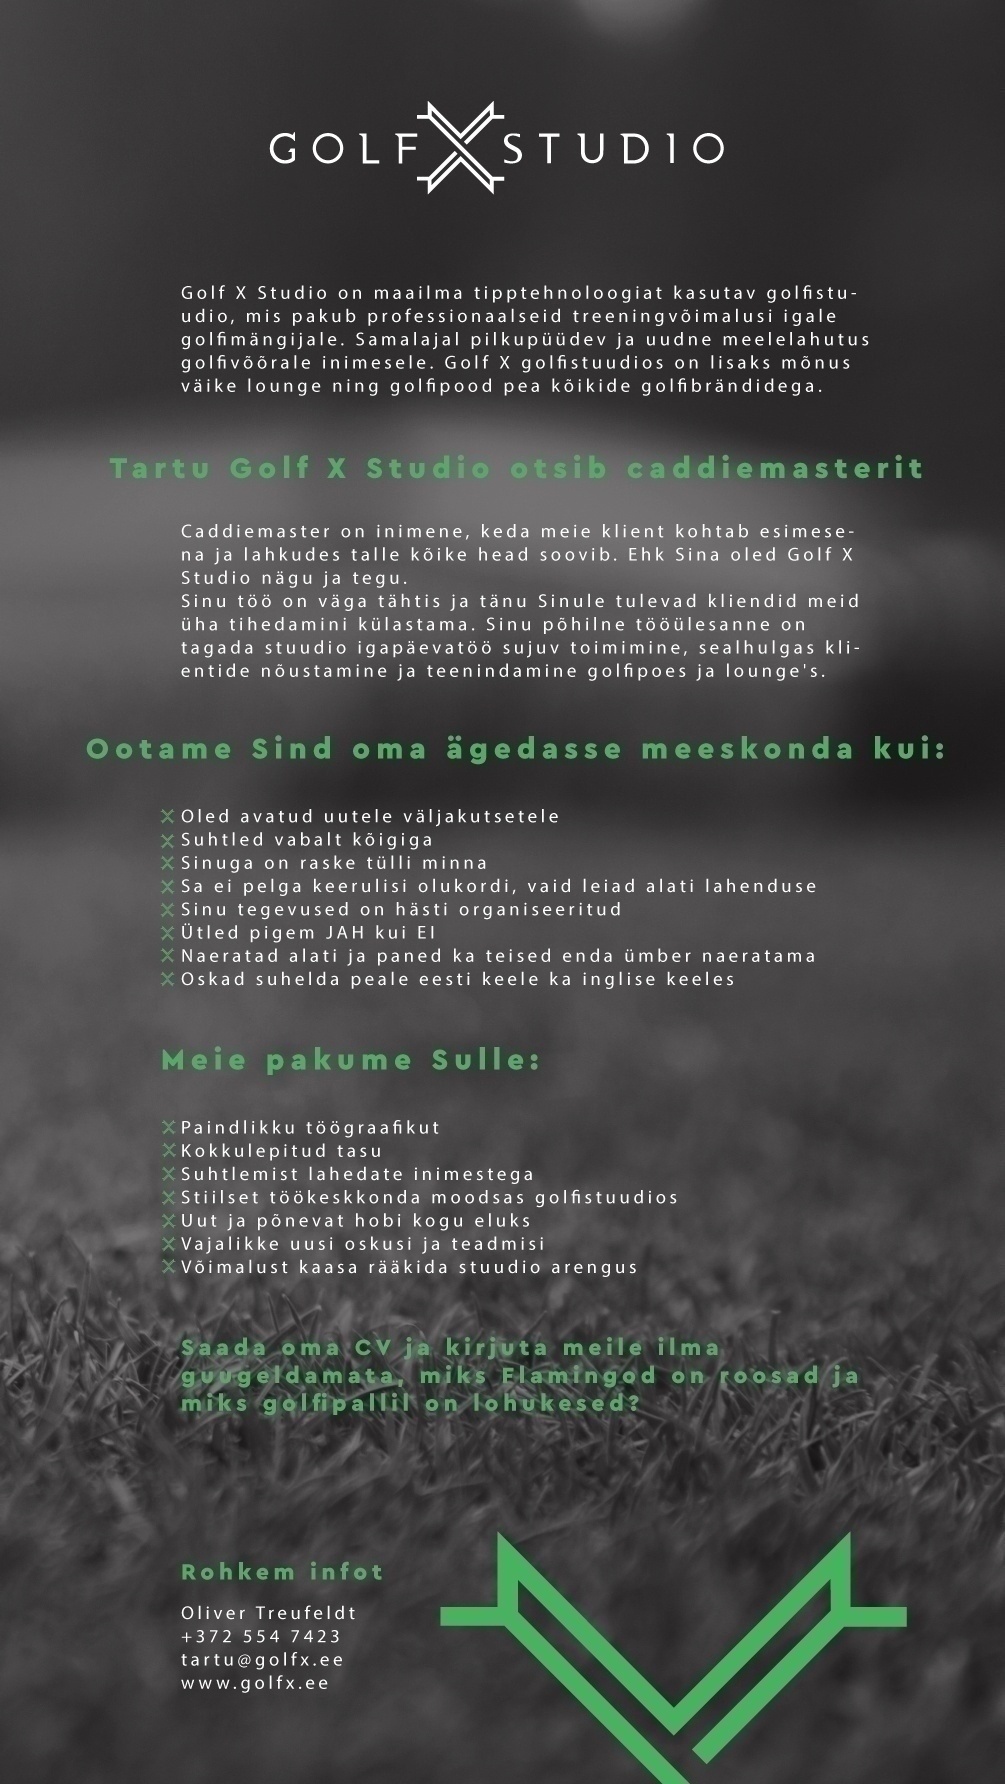 CVKeskus.ee klient Golf X Studio Caddiemaster/administraator